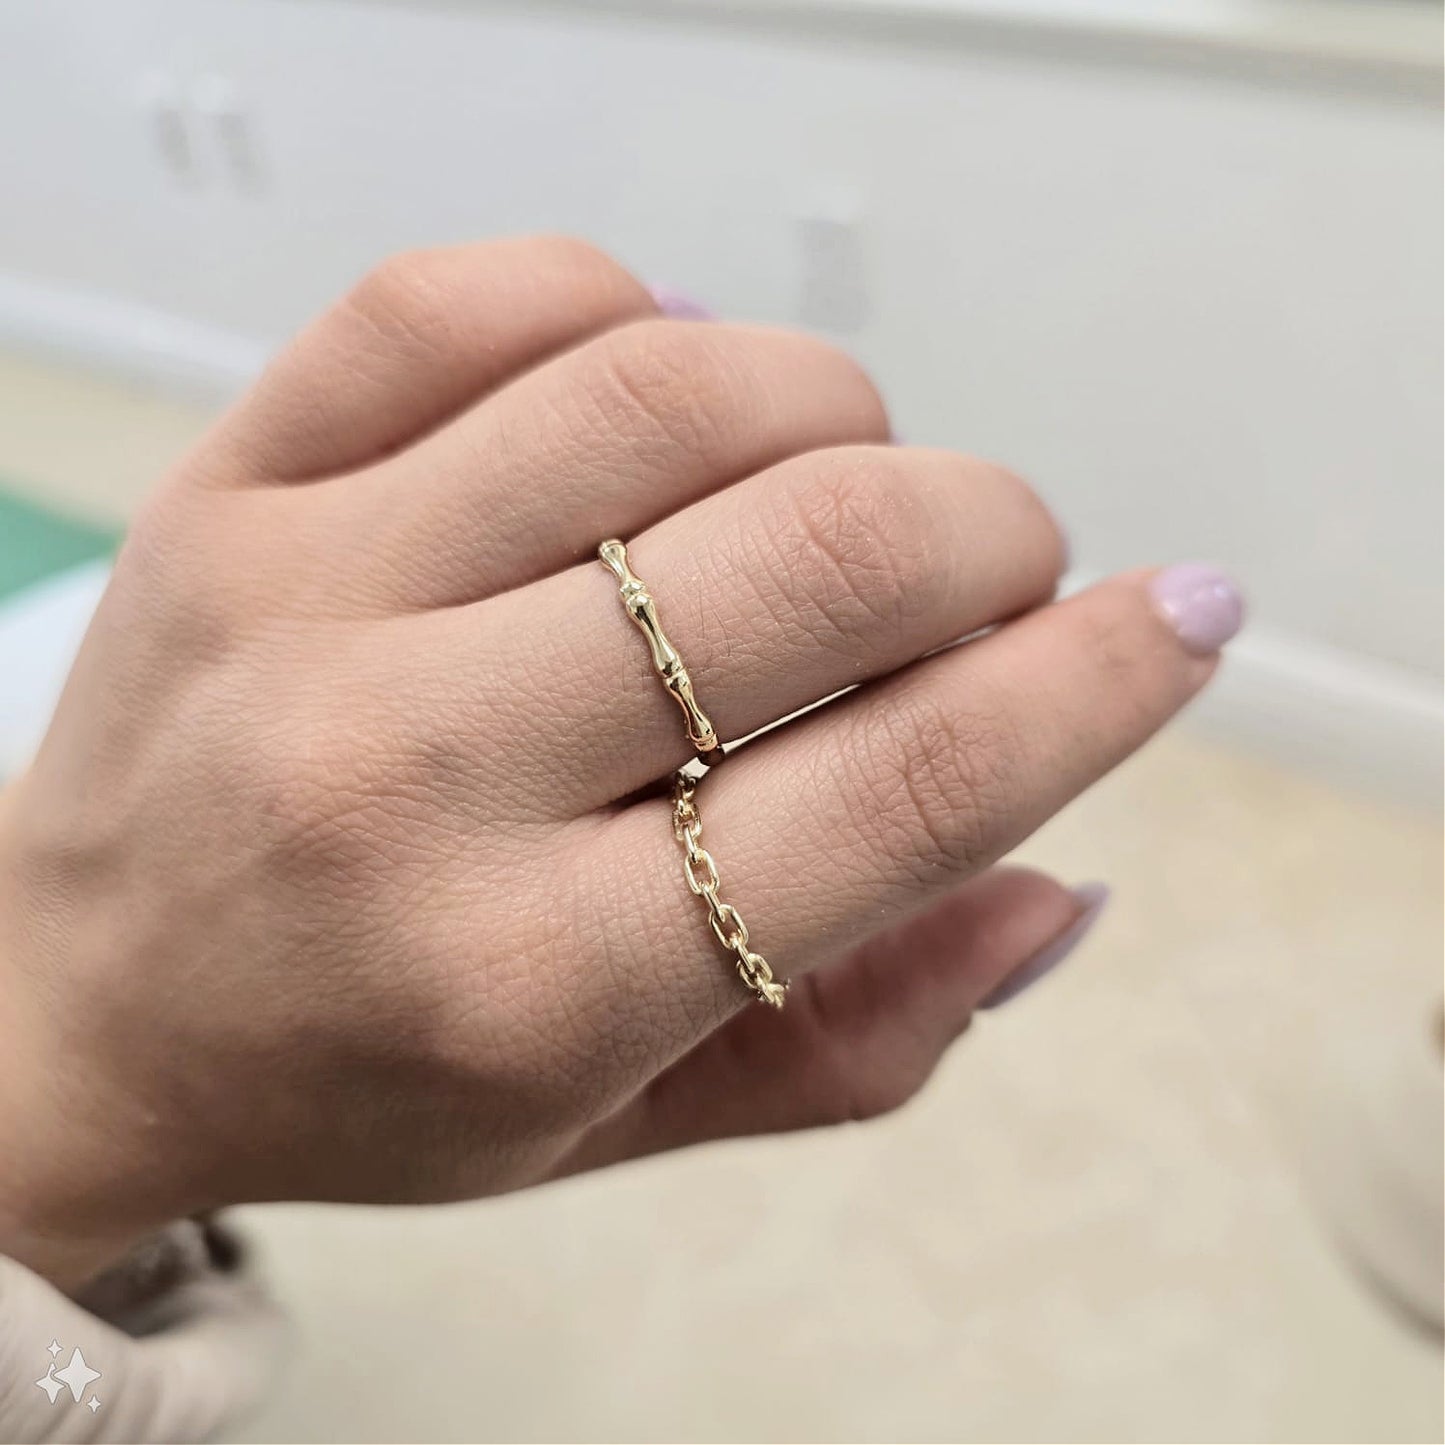 Miniature Chain Ring